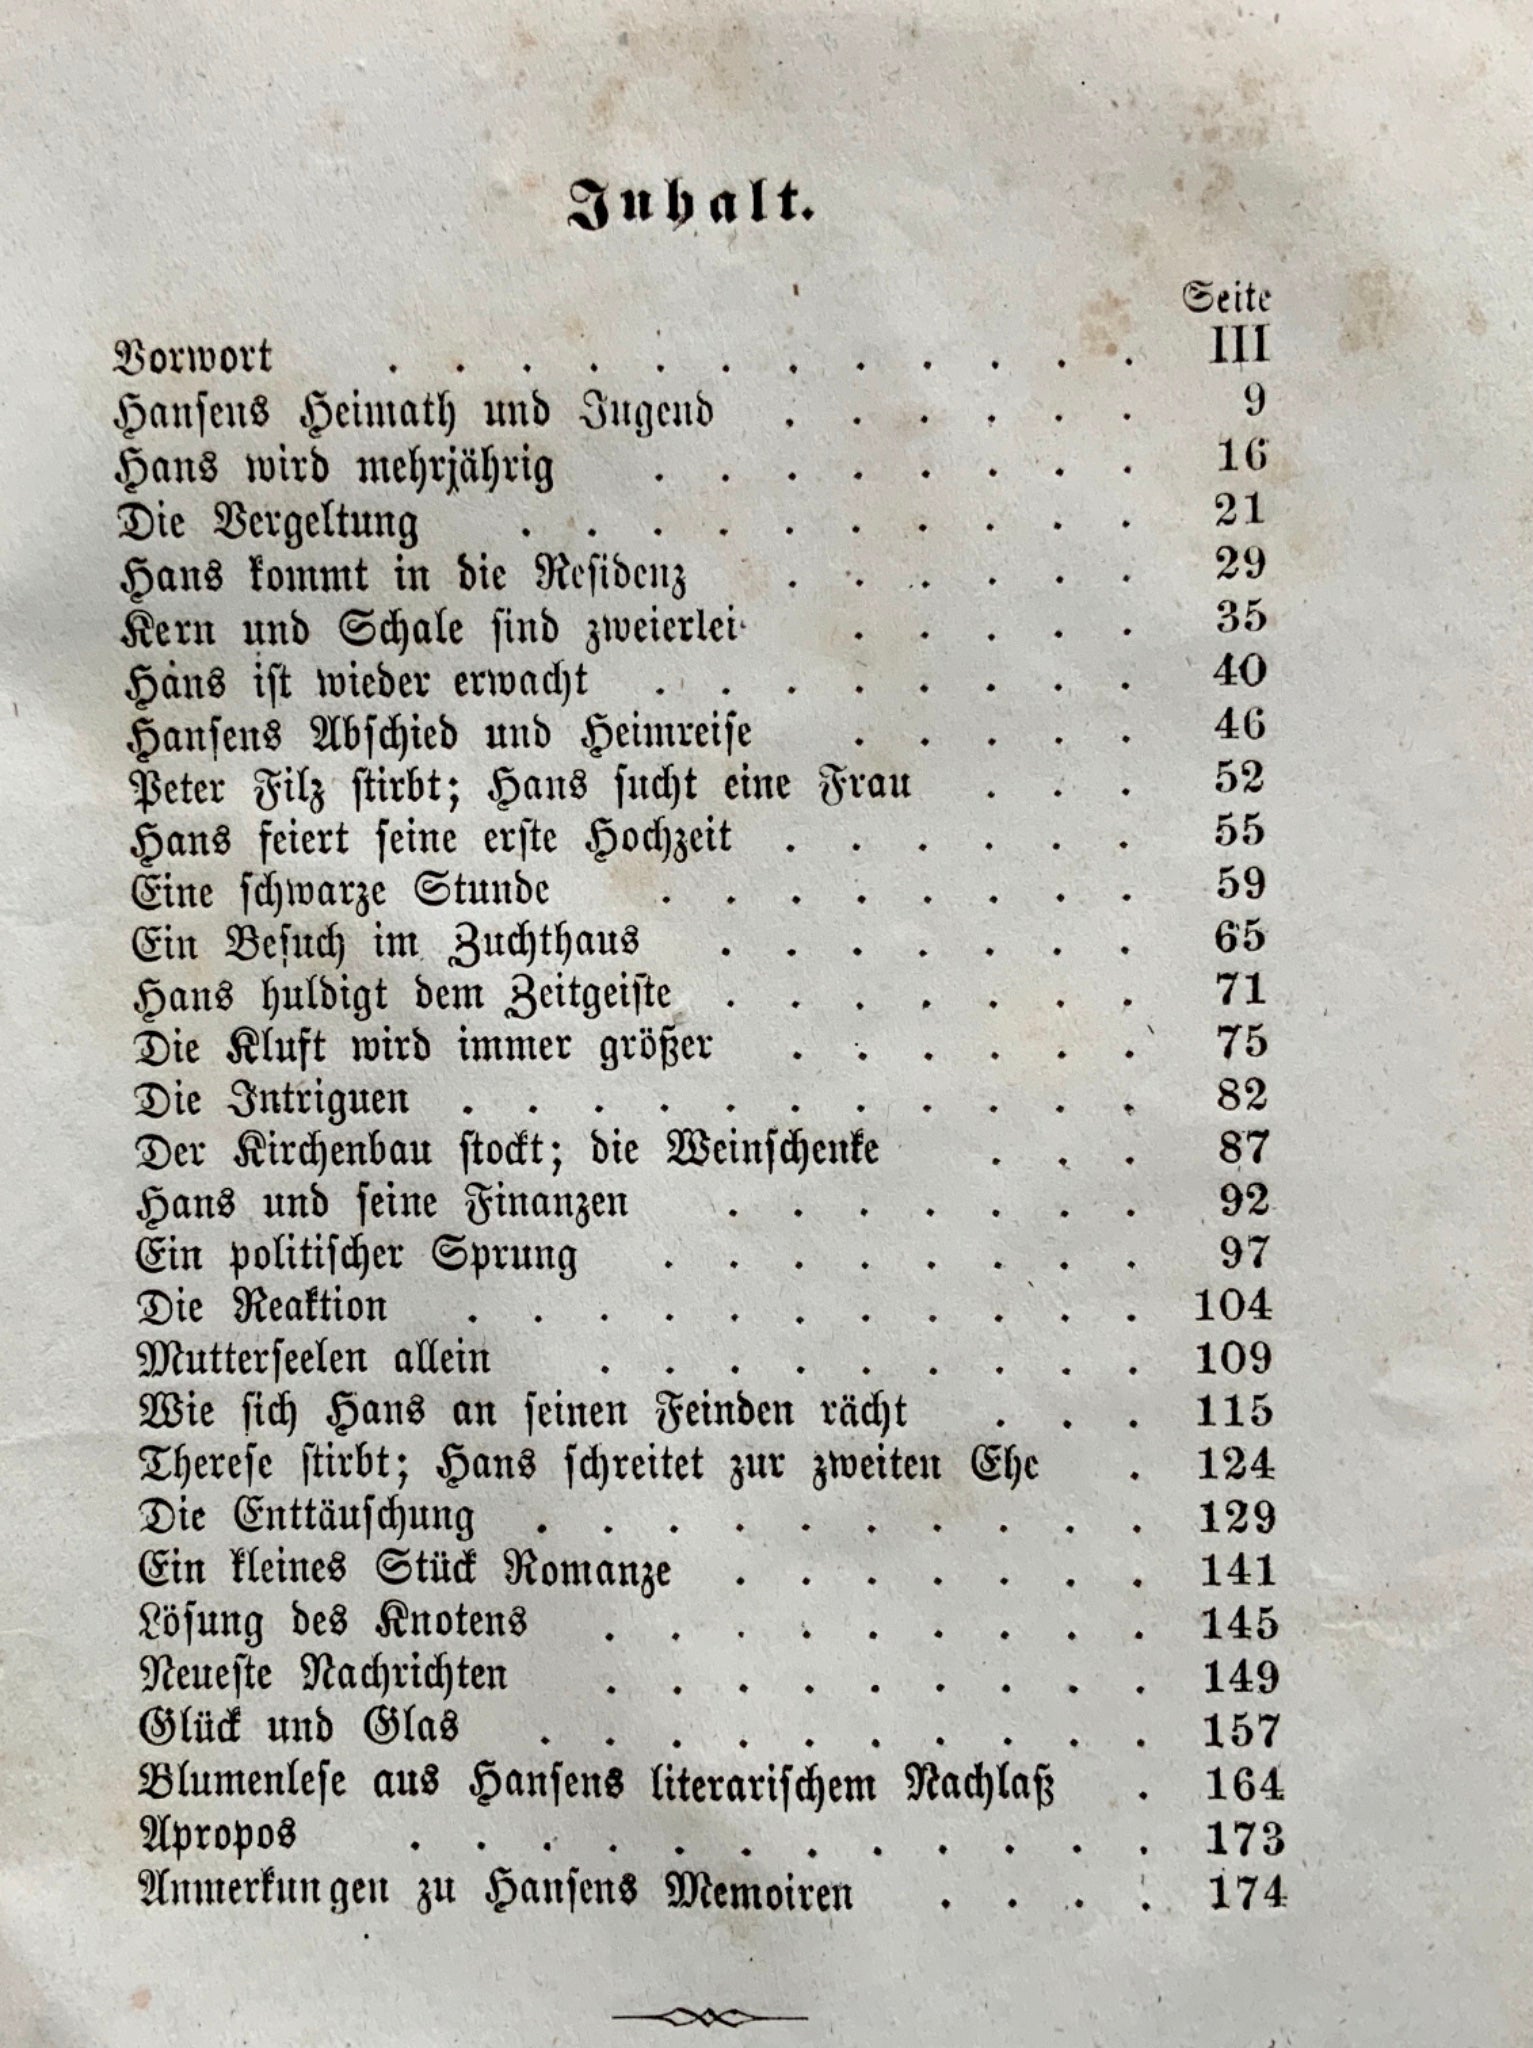 1862 ALCOHOLISM Kaempfen, Joseph. Hans Trunkenbold, oder der Materialist - Book, Switzerland